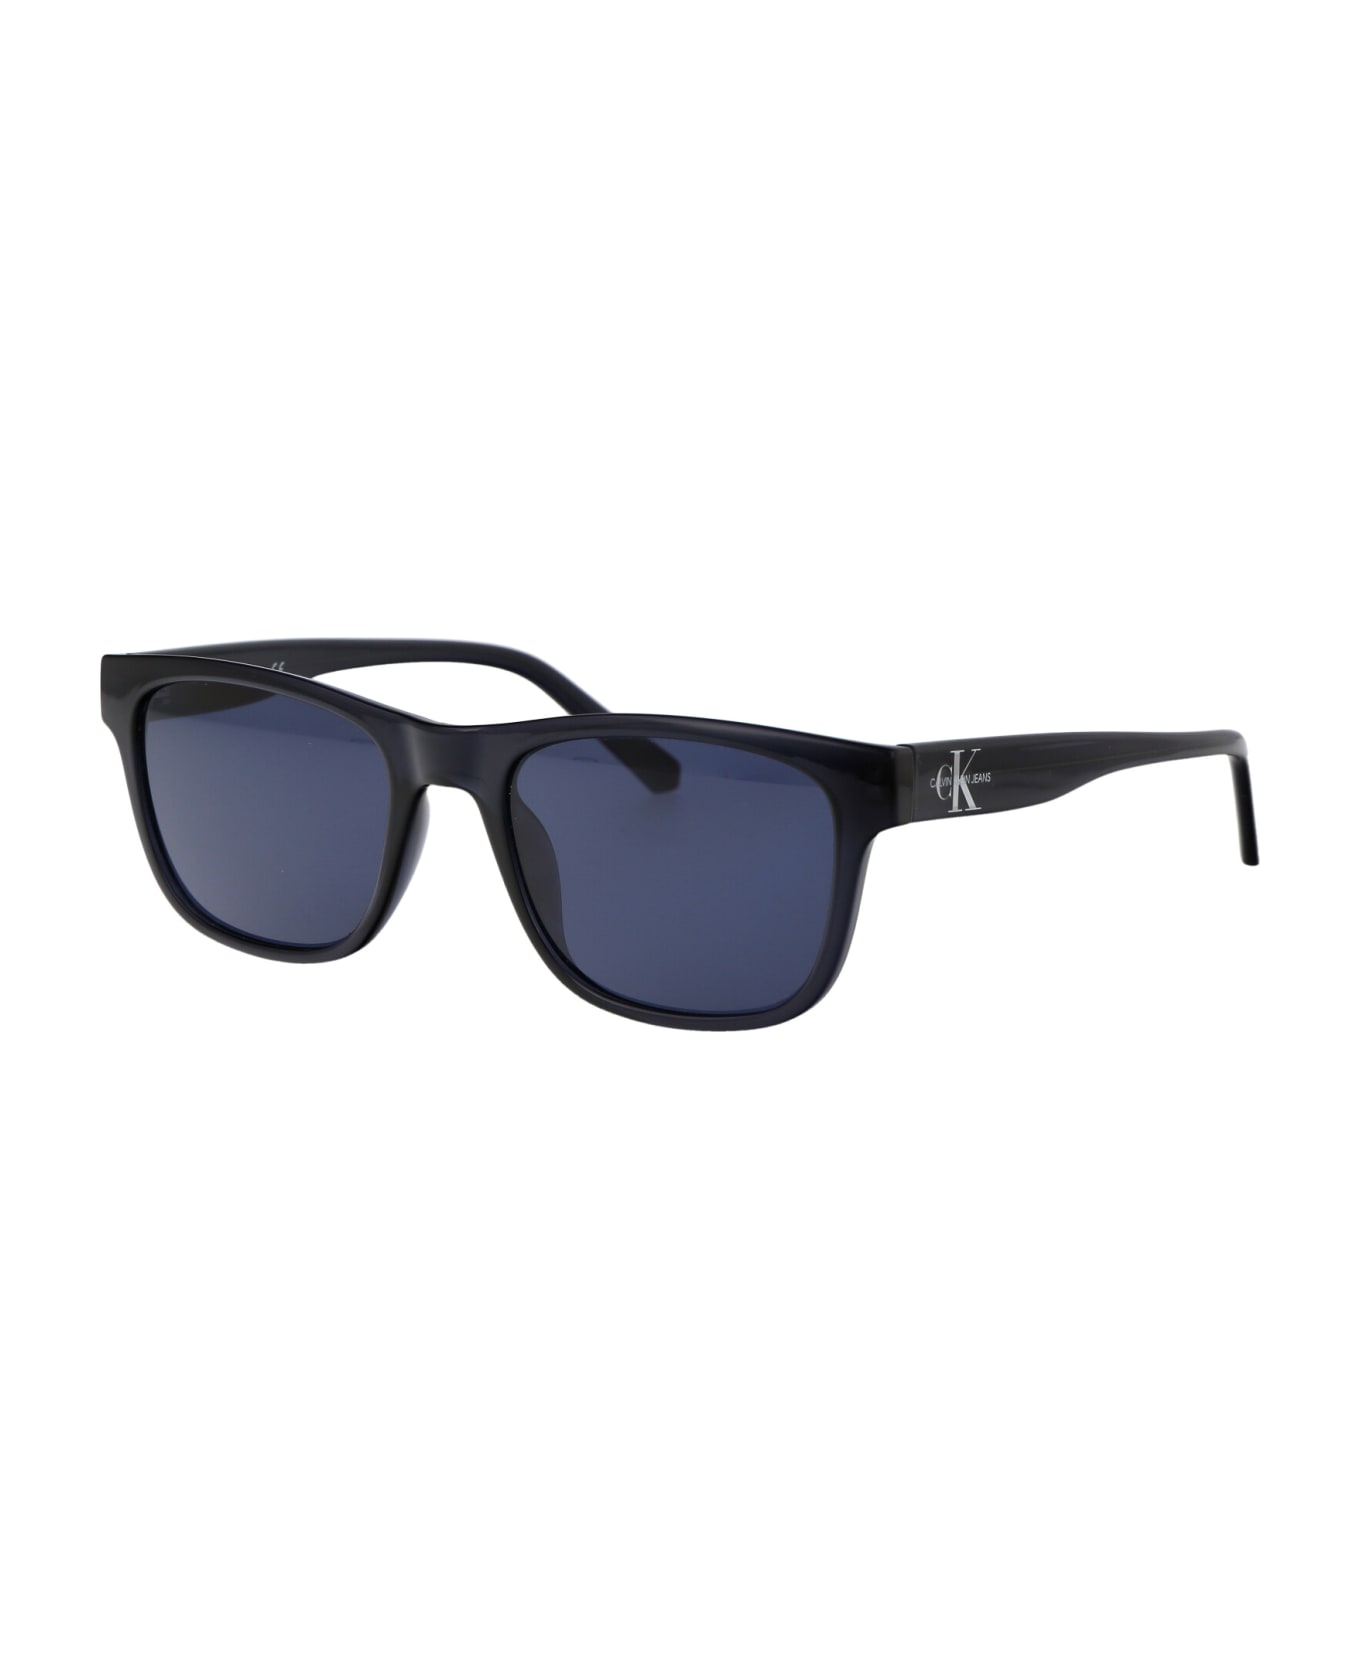 Calvin Klein Jeans Ck20632s Sunglasses - 405 BLACK BLUE